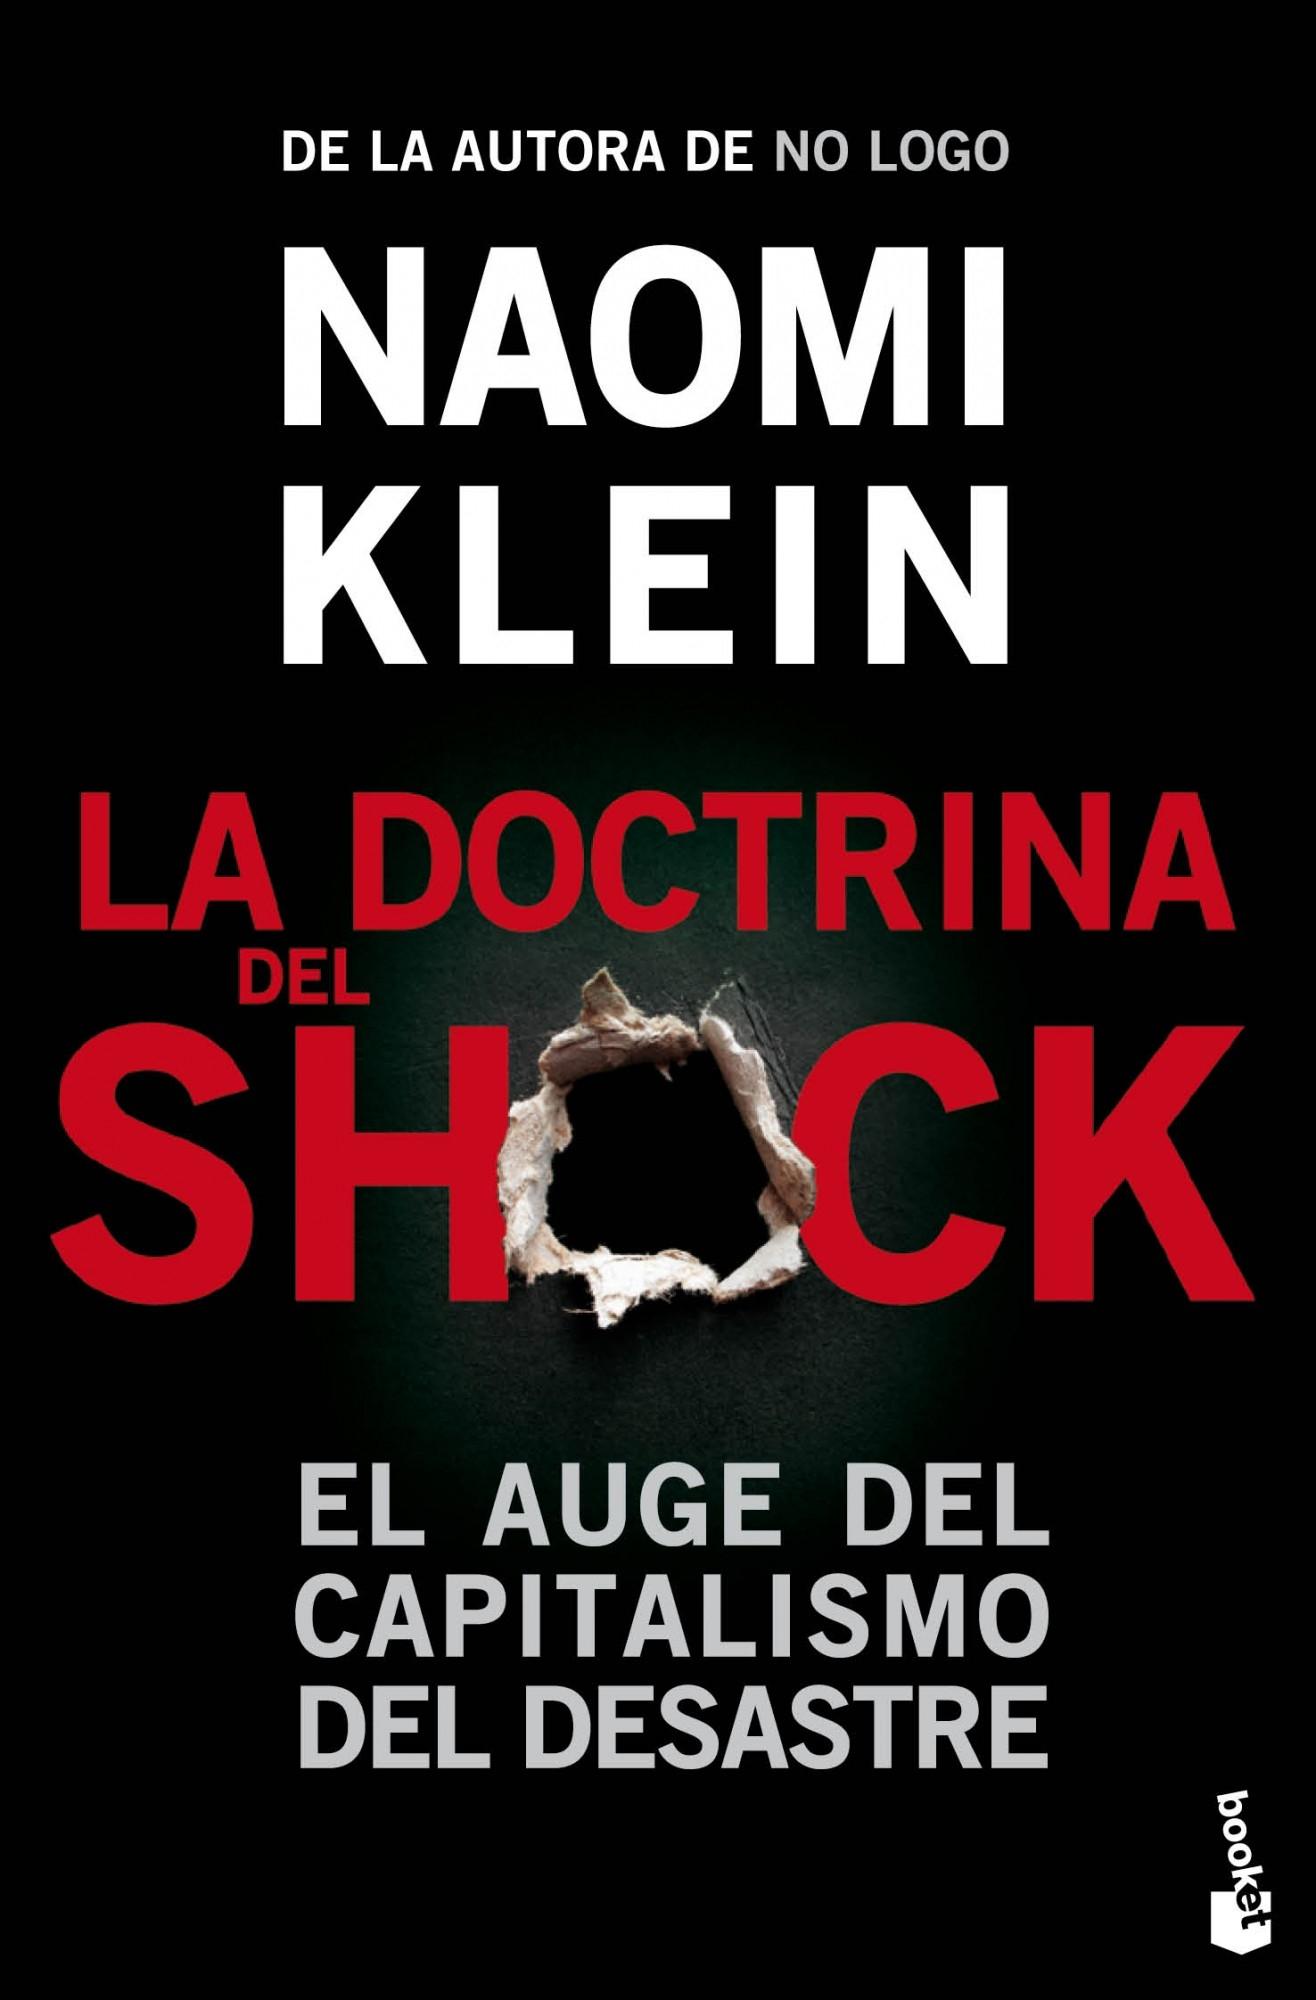 La doctrina del shock "El auge del capitalismo del desastre"